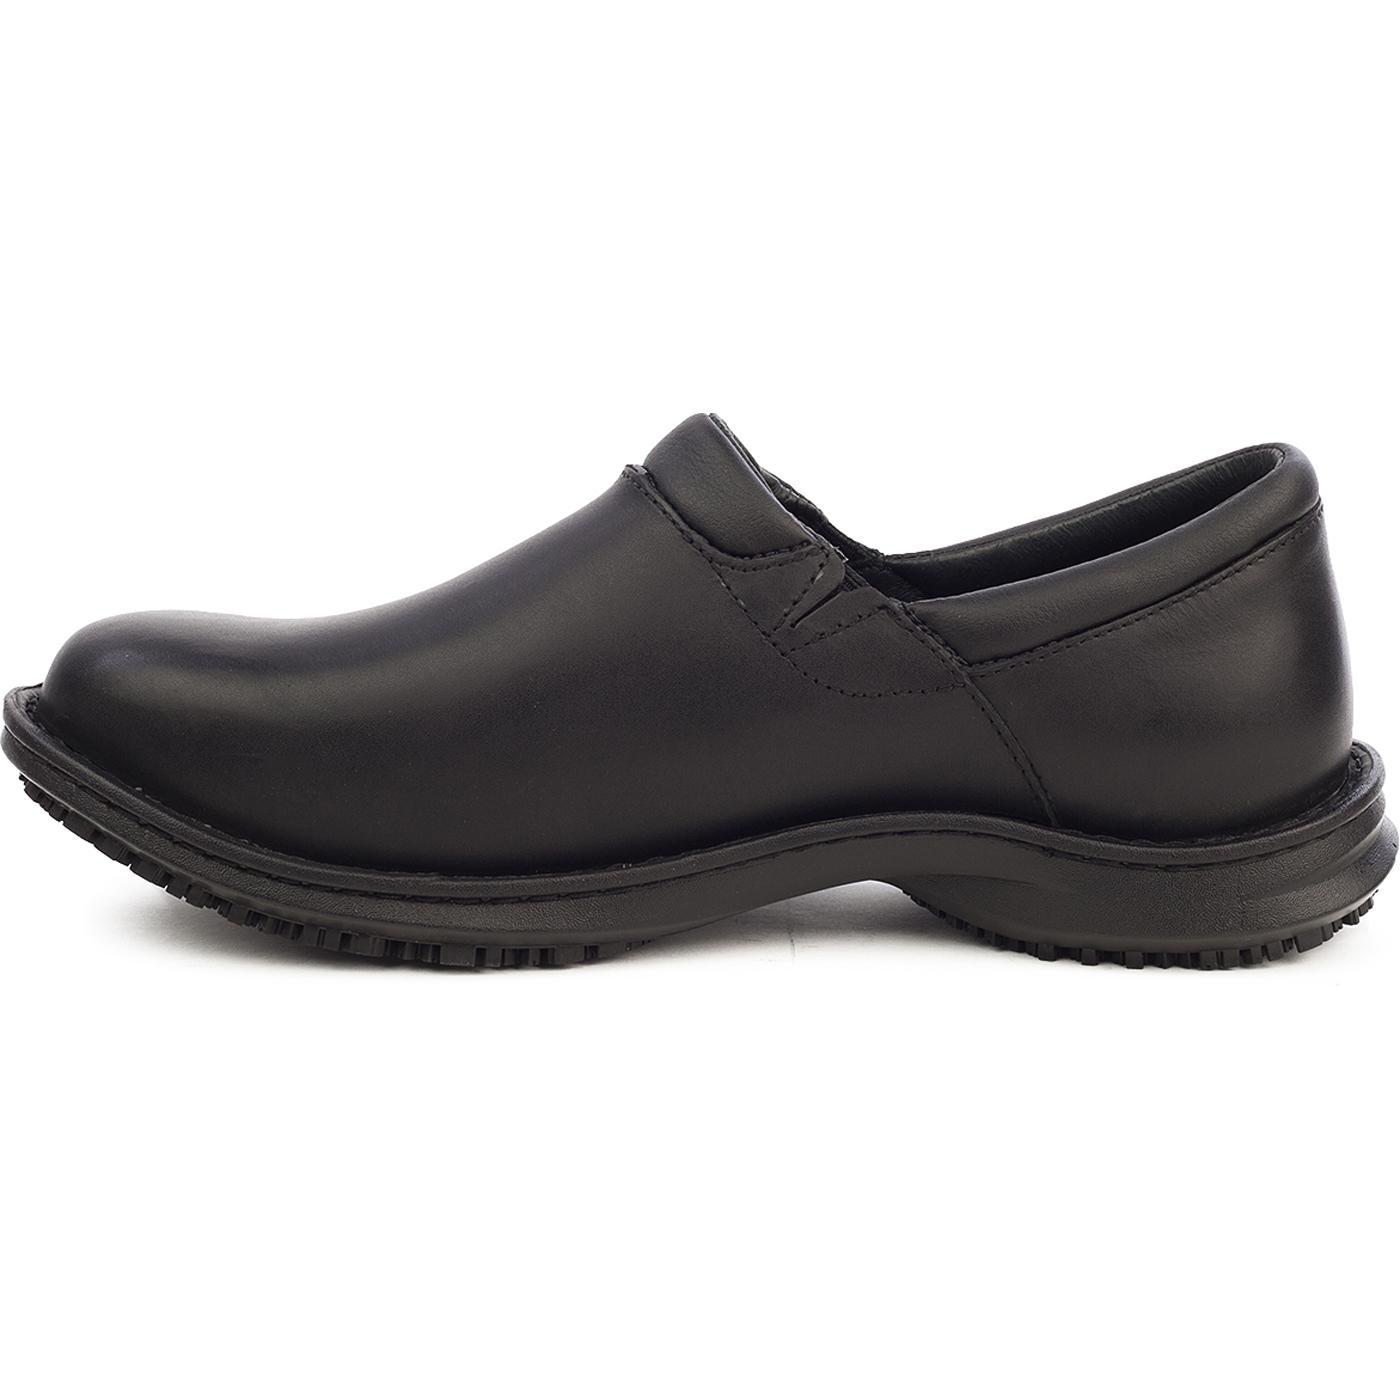 Timberland PRO Men's Slip-Resistant Black Leather Slip-On Shoes, #47598